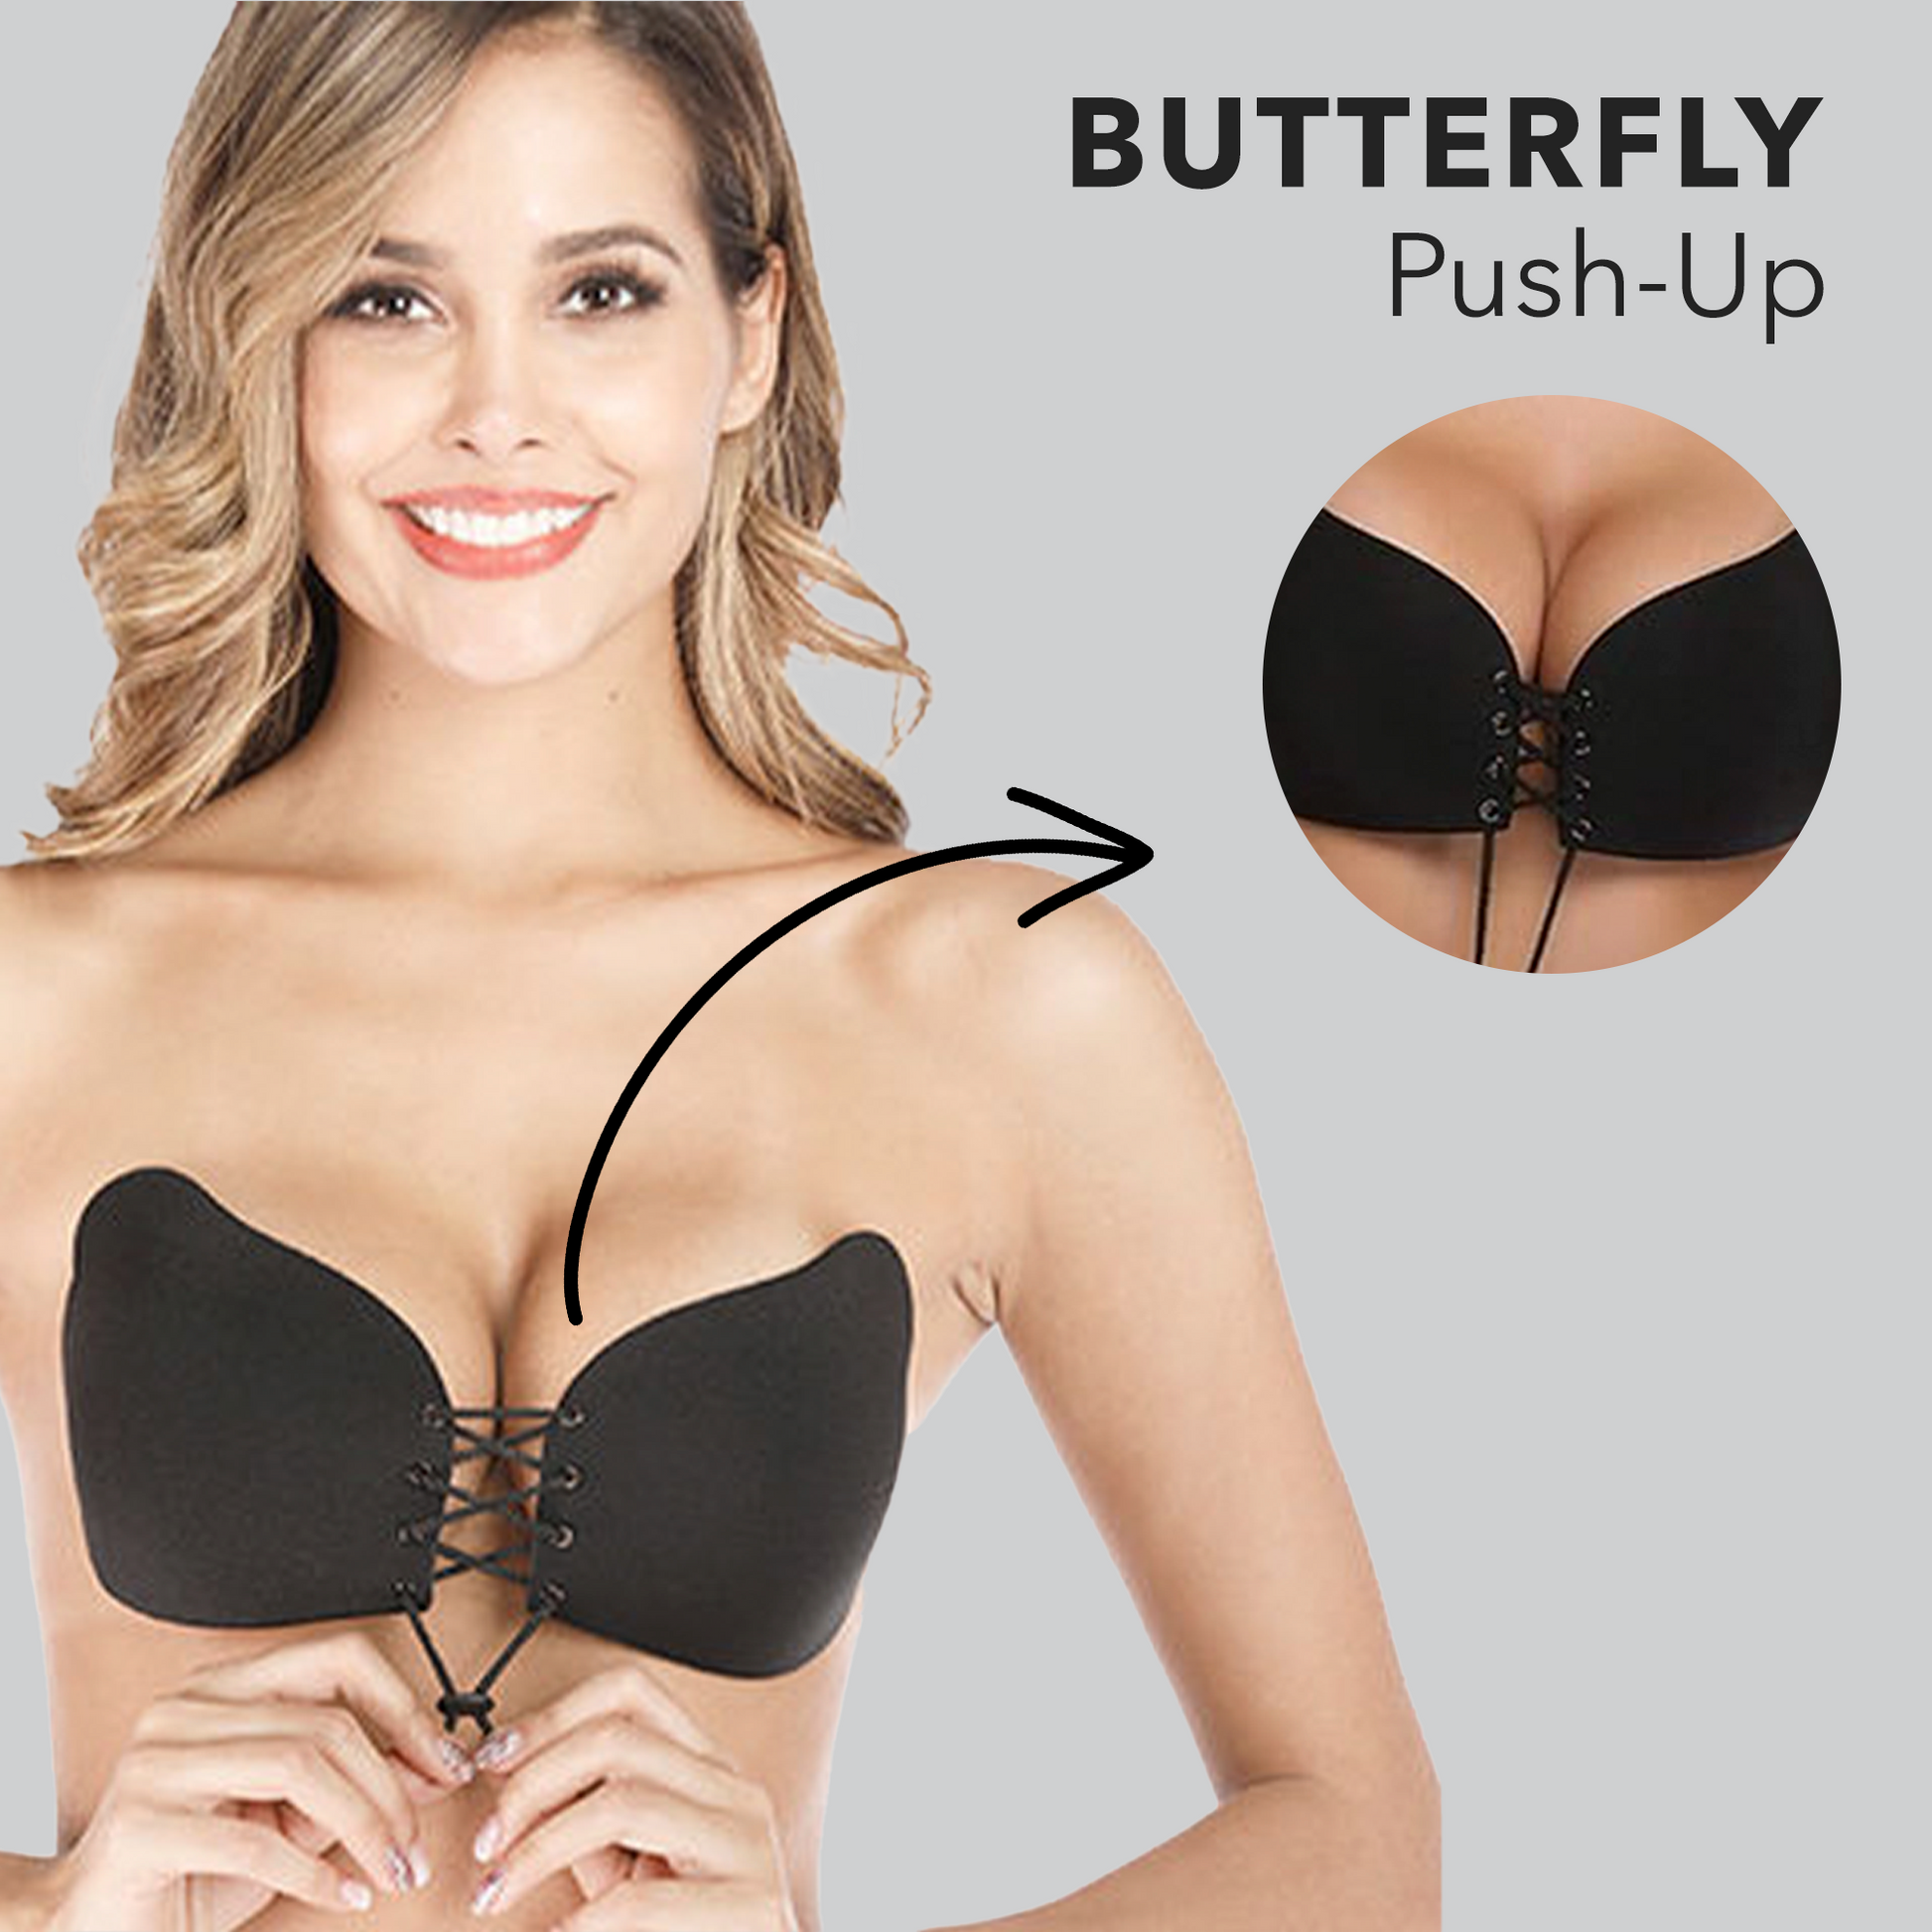 Butterfly Bra (Buy 1 Get 1 Free) – Cheekee